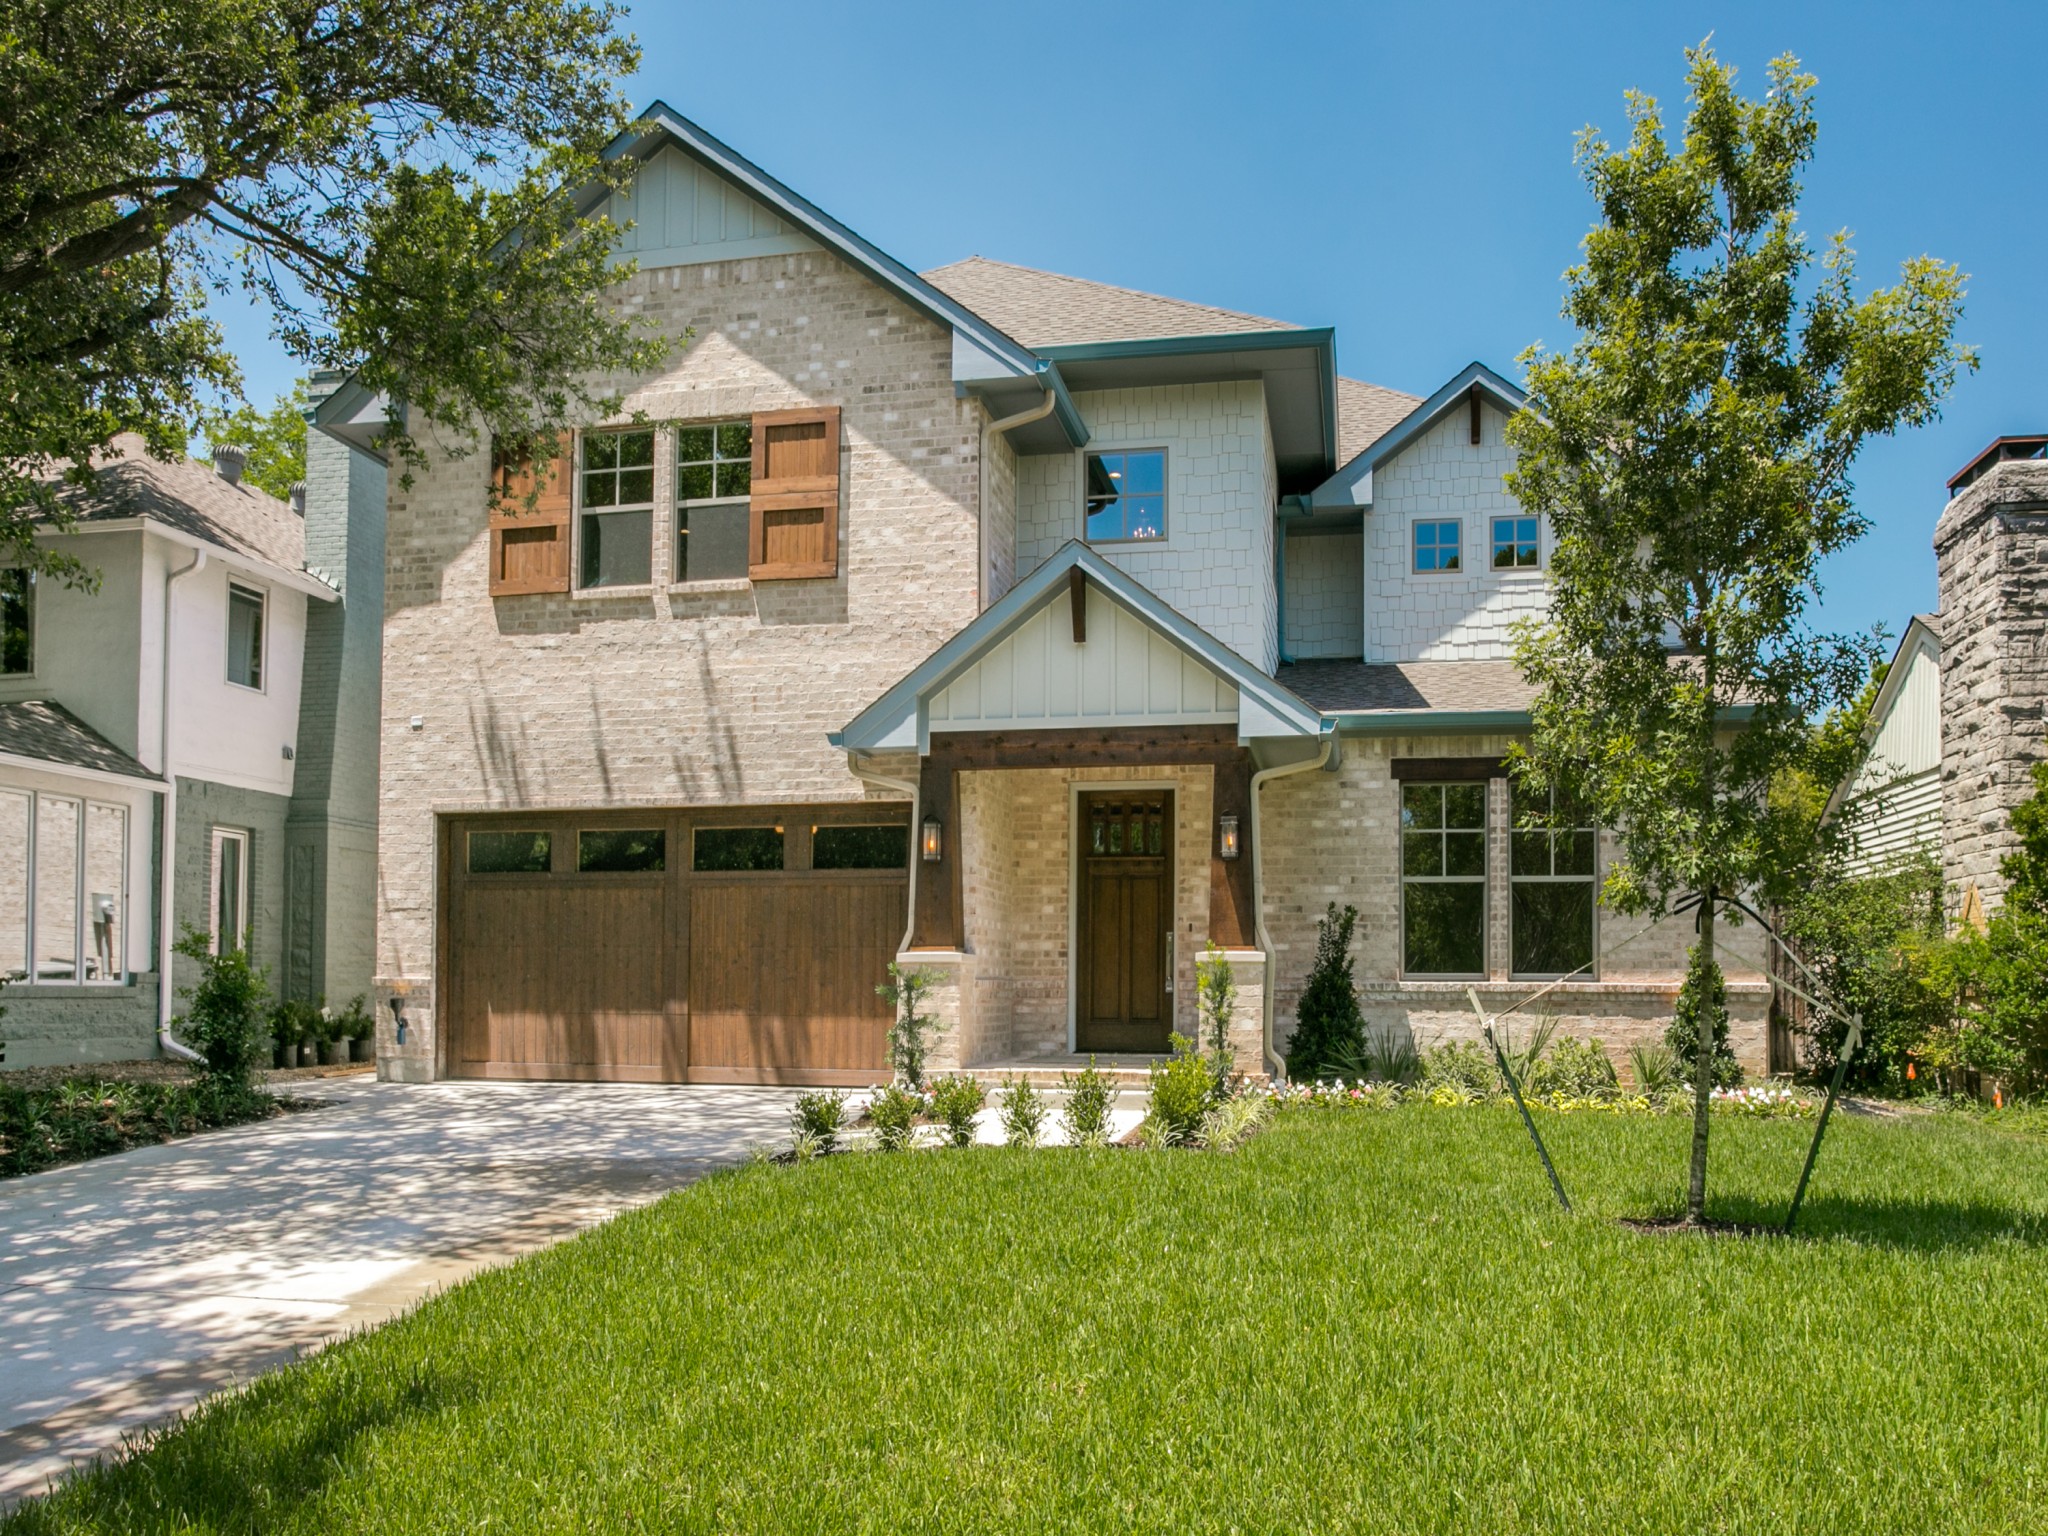 Craftsman style home in Lakewood Dallas, by custom homebuilder, Desco Custom Homes. 972-381-8995